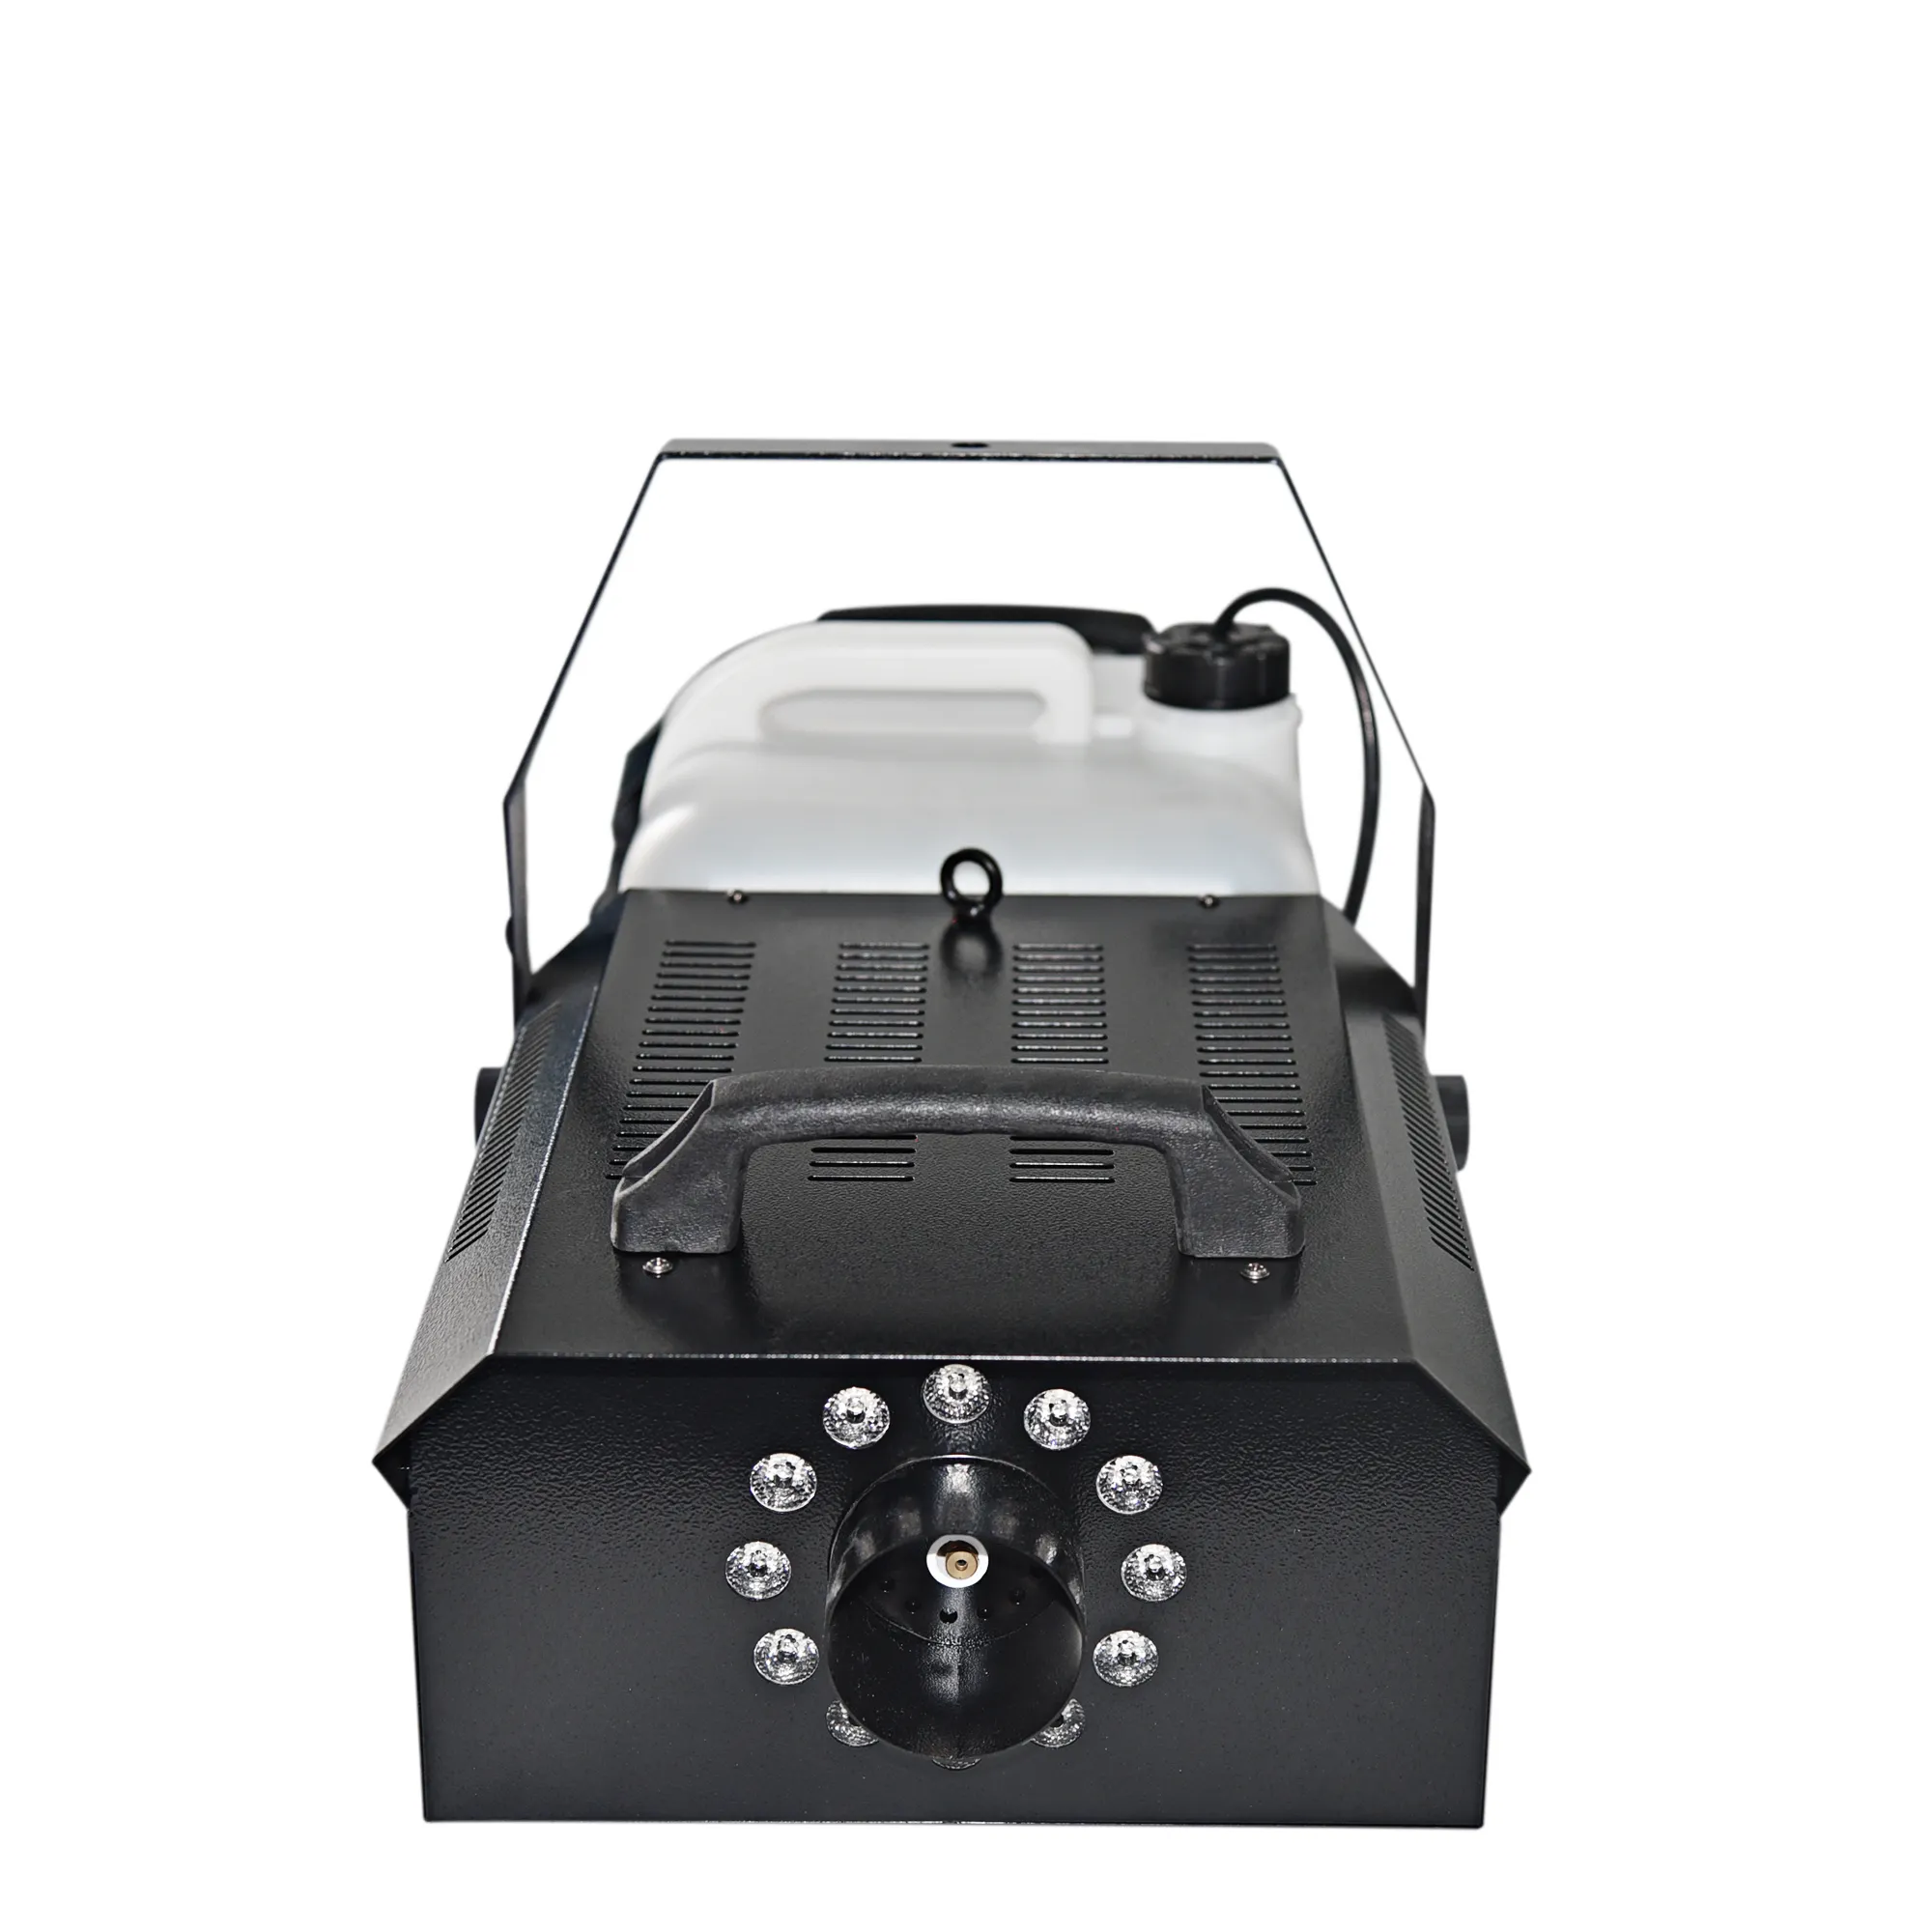 पेशेवर शादी और पार्टी उपकरण एलईडी 3000w कोहरे मशीन उच्च शक्ति धुआं सबसे बड़ी मशीन DMX512 नियंत्रक मंच प्रभाव